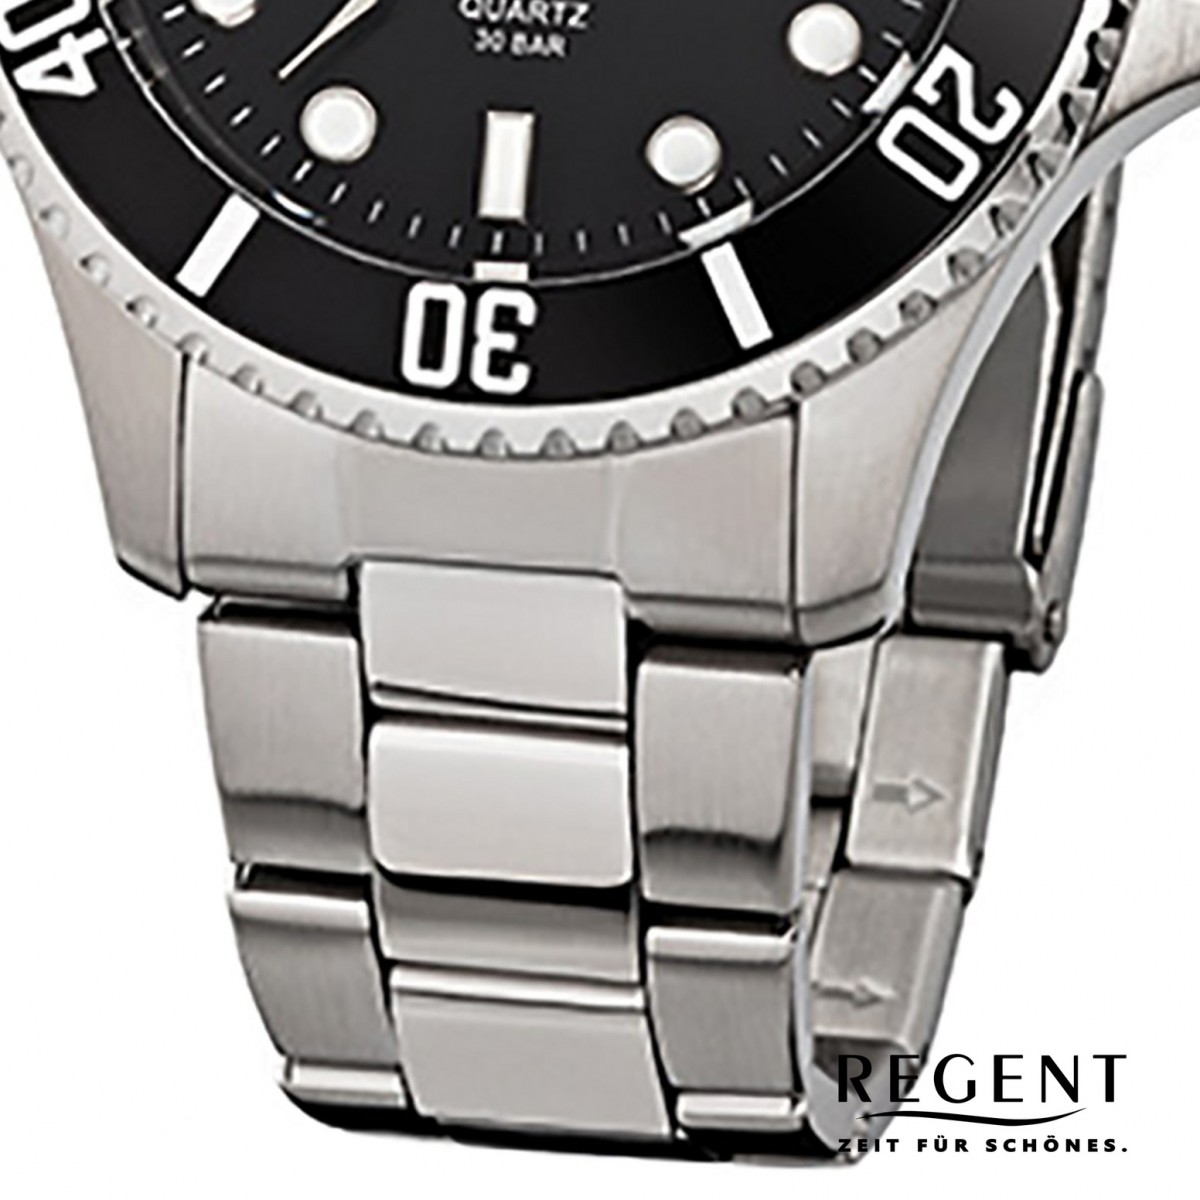 Stahl-Armband Quarz-Uhr URF371 Regent Herren-Armbanduhr silber F-371